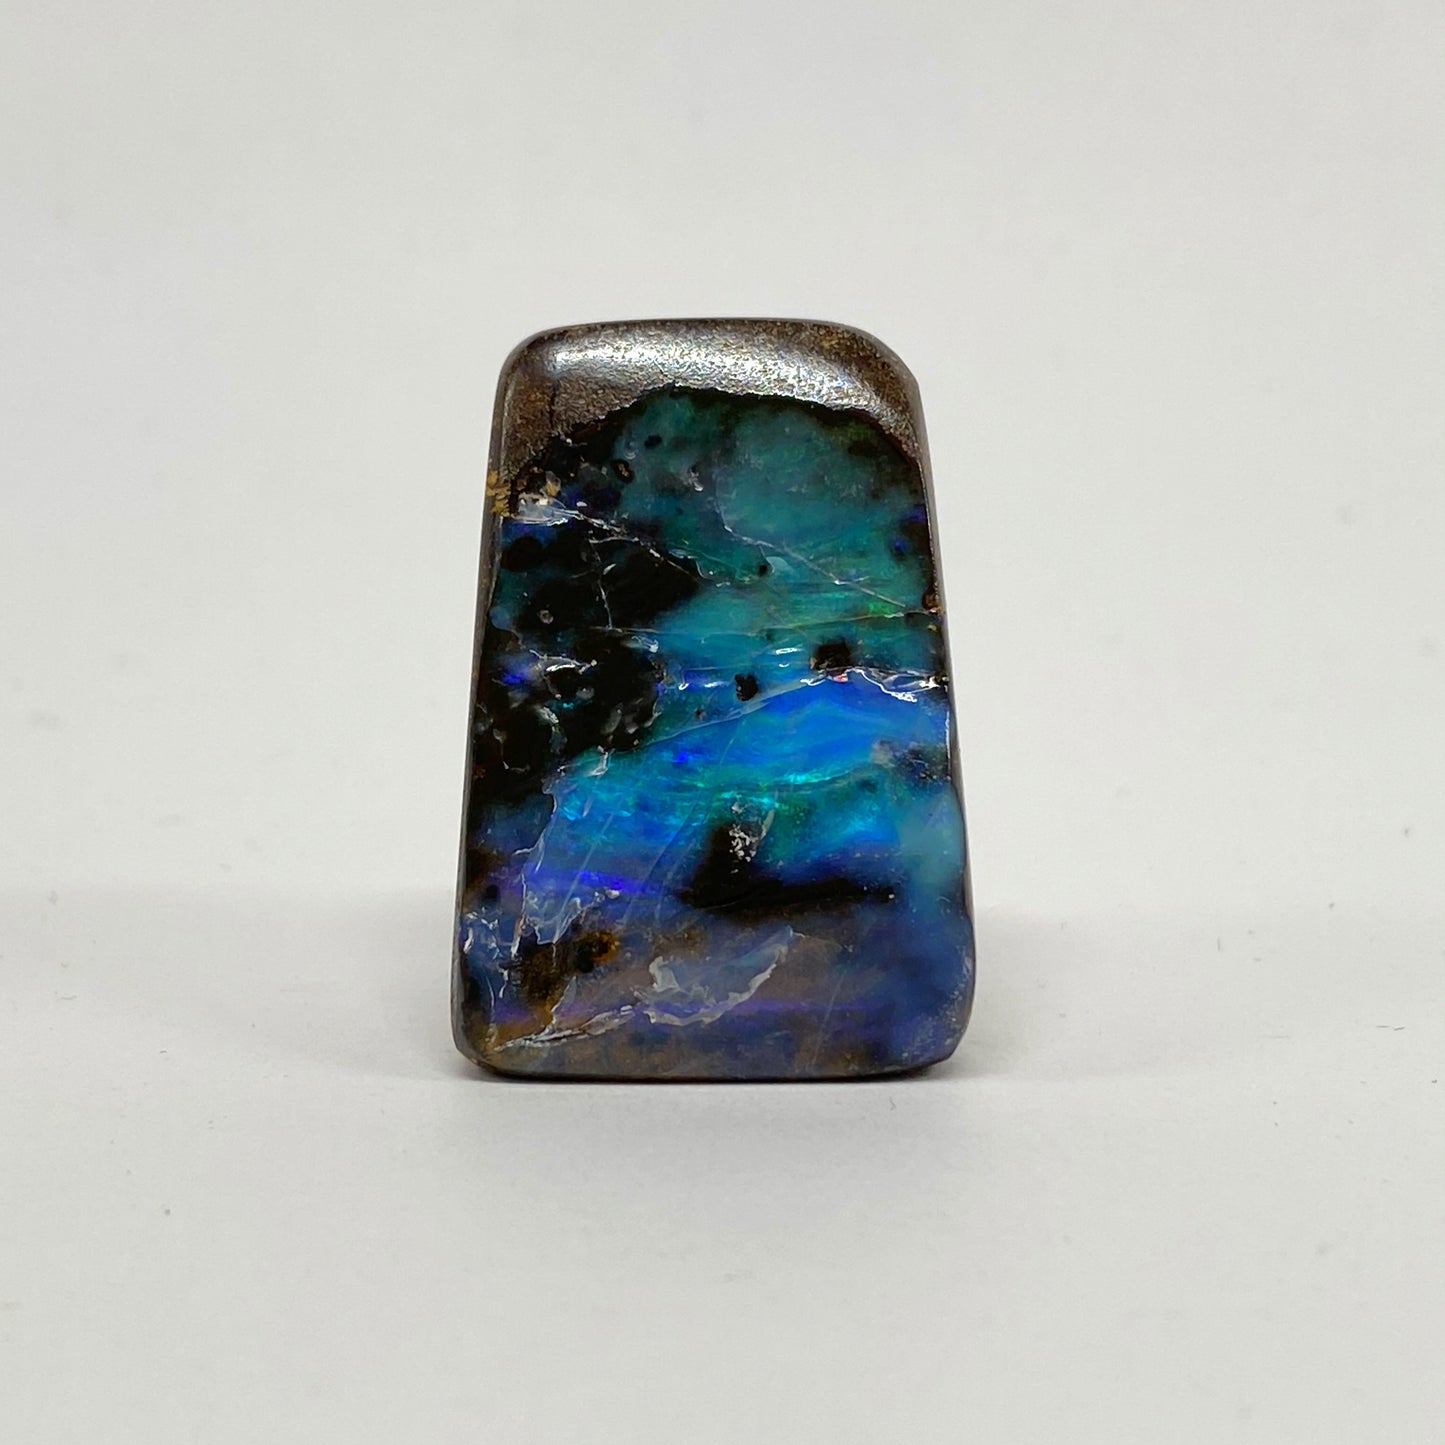 125 Ct small boulder opal specimen